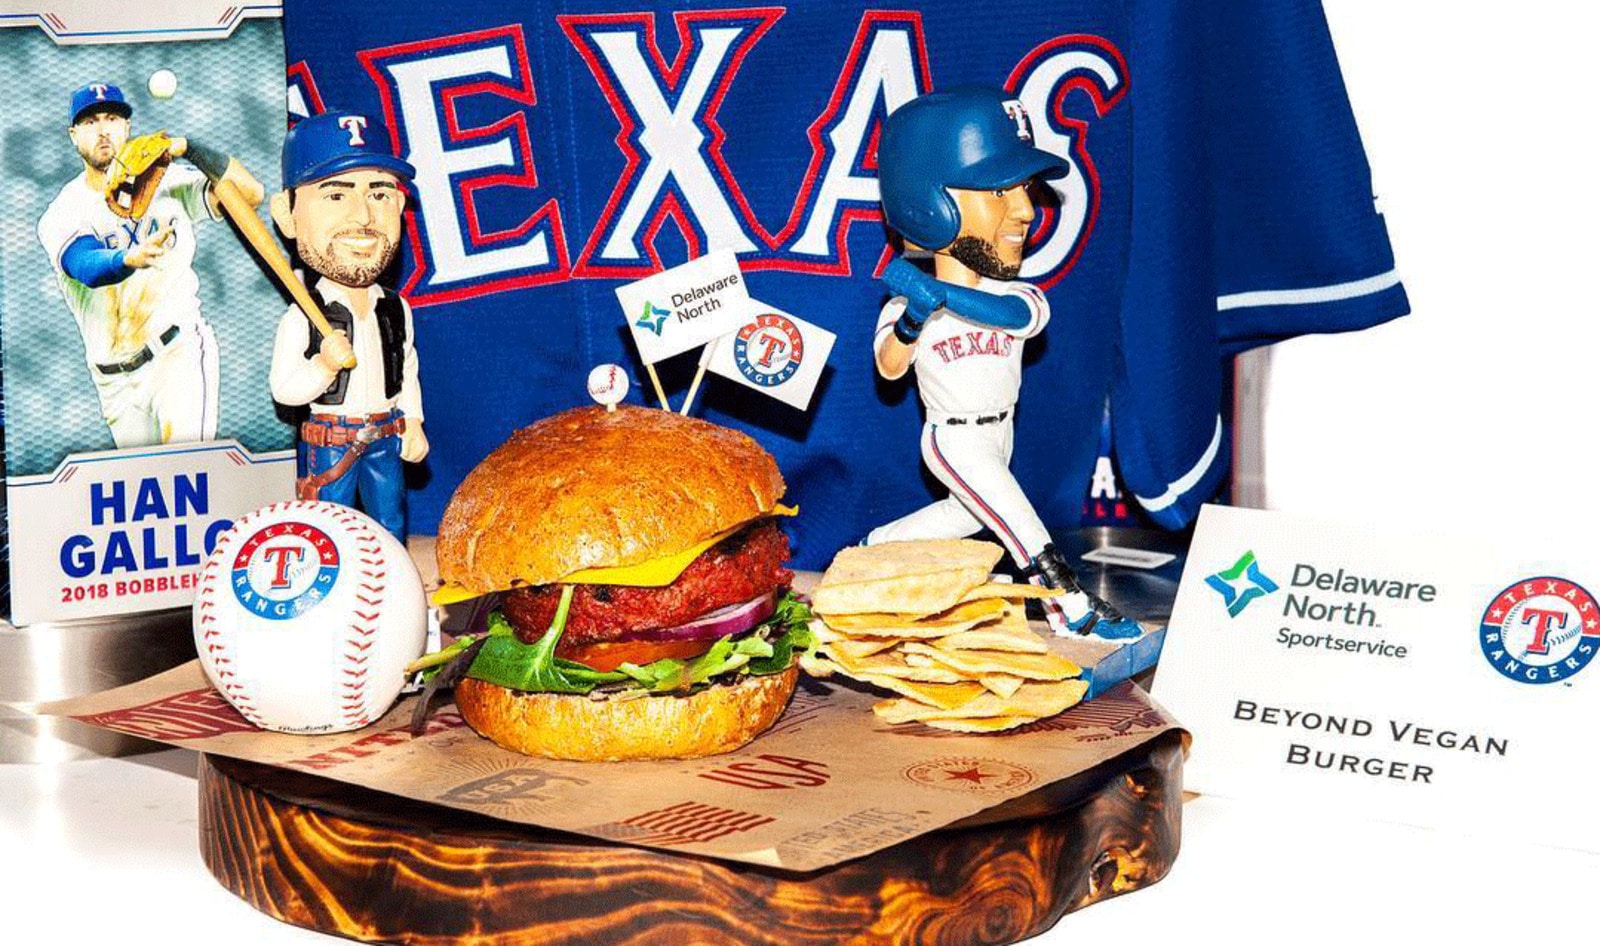 Vegan Cheeseburgers Debut at Texas Rangers’ Stadium for Baseball Season